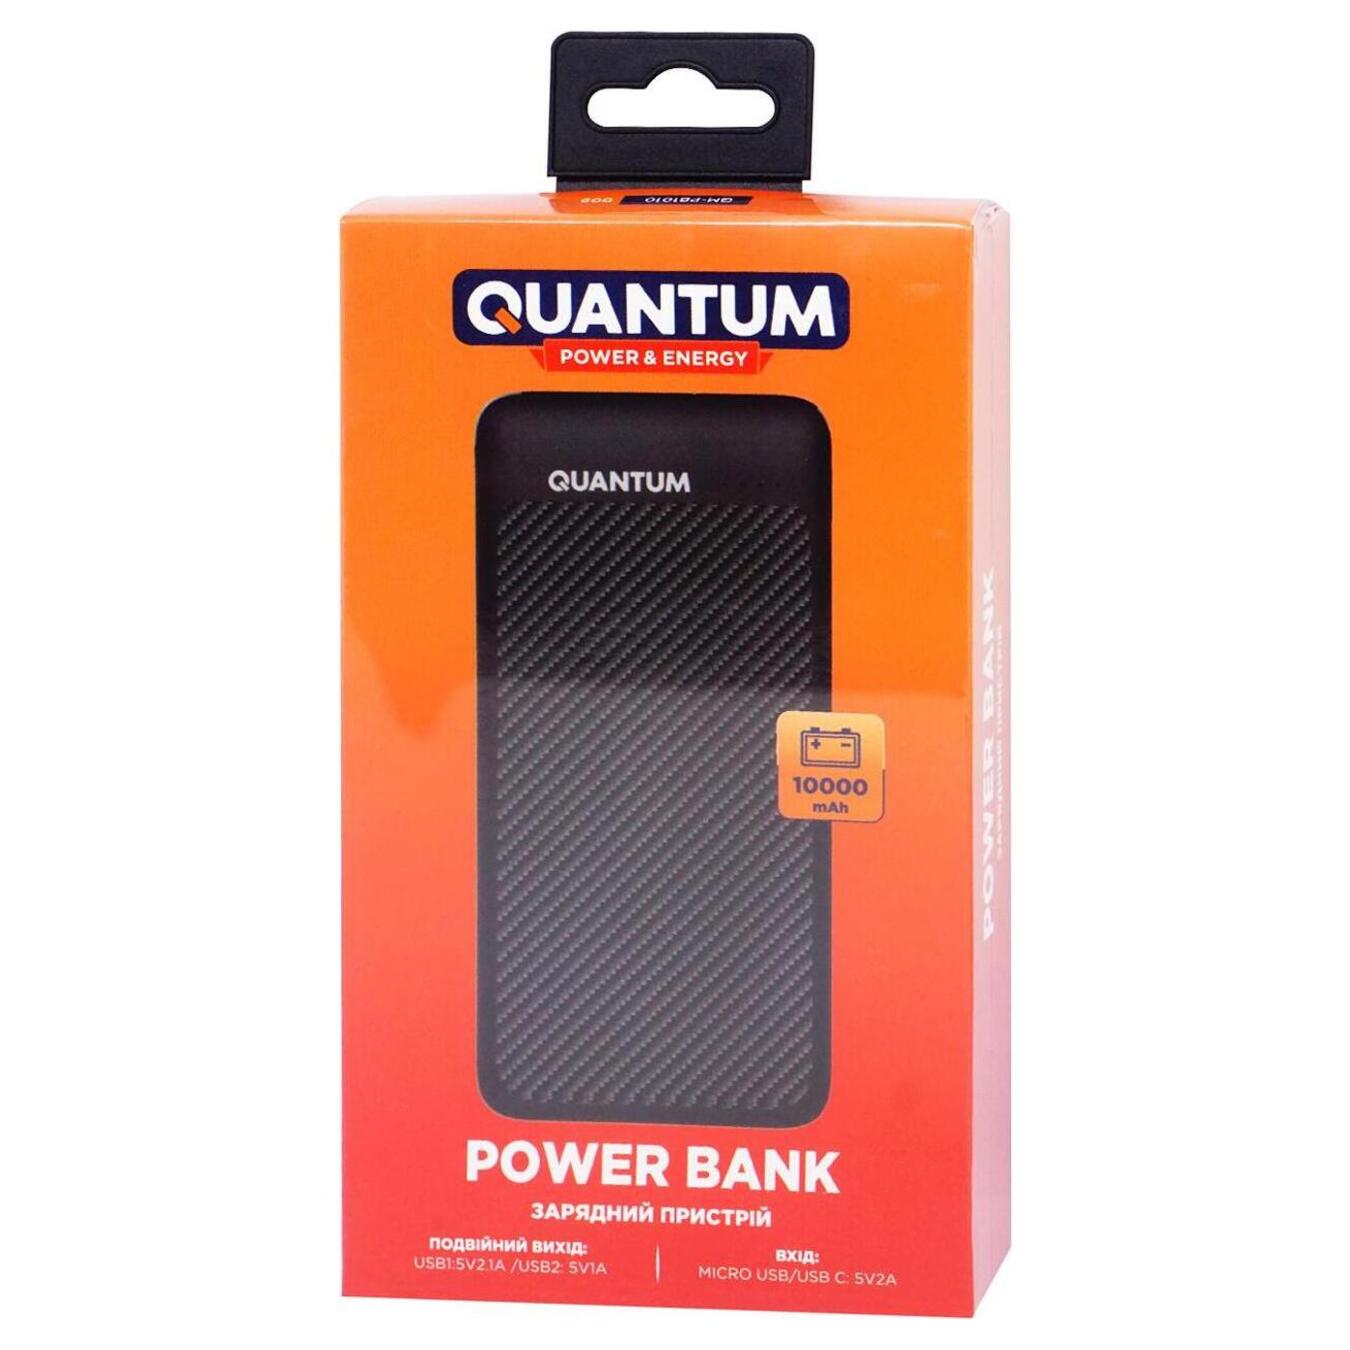 Universal mobile battery (Power bank) Quantum QM-PB1010 black 10,000mAh 3.7V (2-USB)